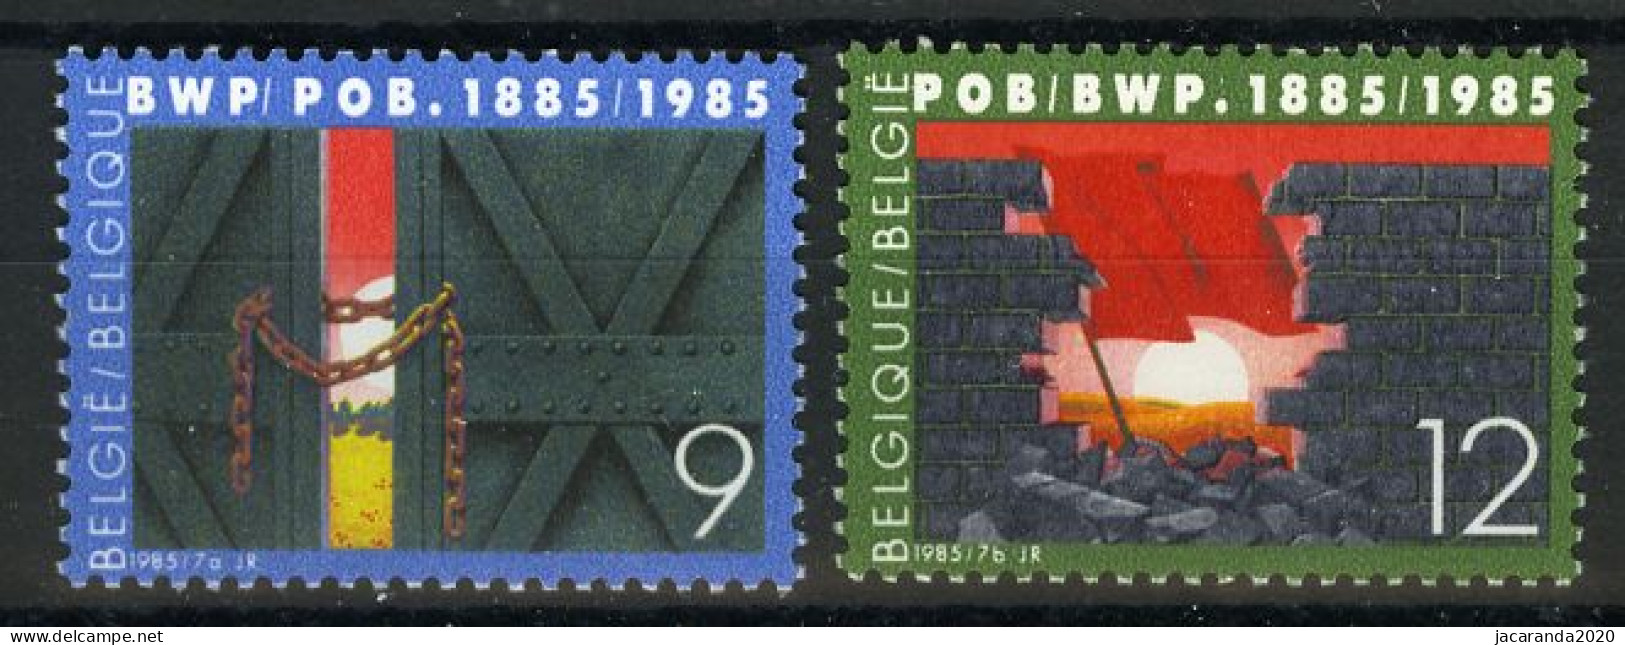 België 2167/68 - 100 Jaar Belgische Werkliedenpartij - B.W.P. - Parti Ouvrier Belge - P.O.B. - Neufs